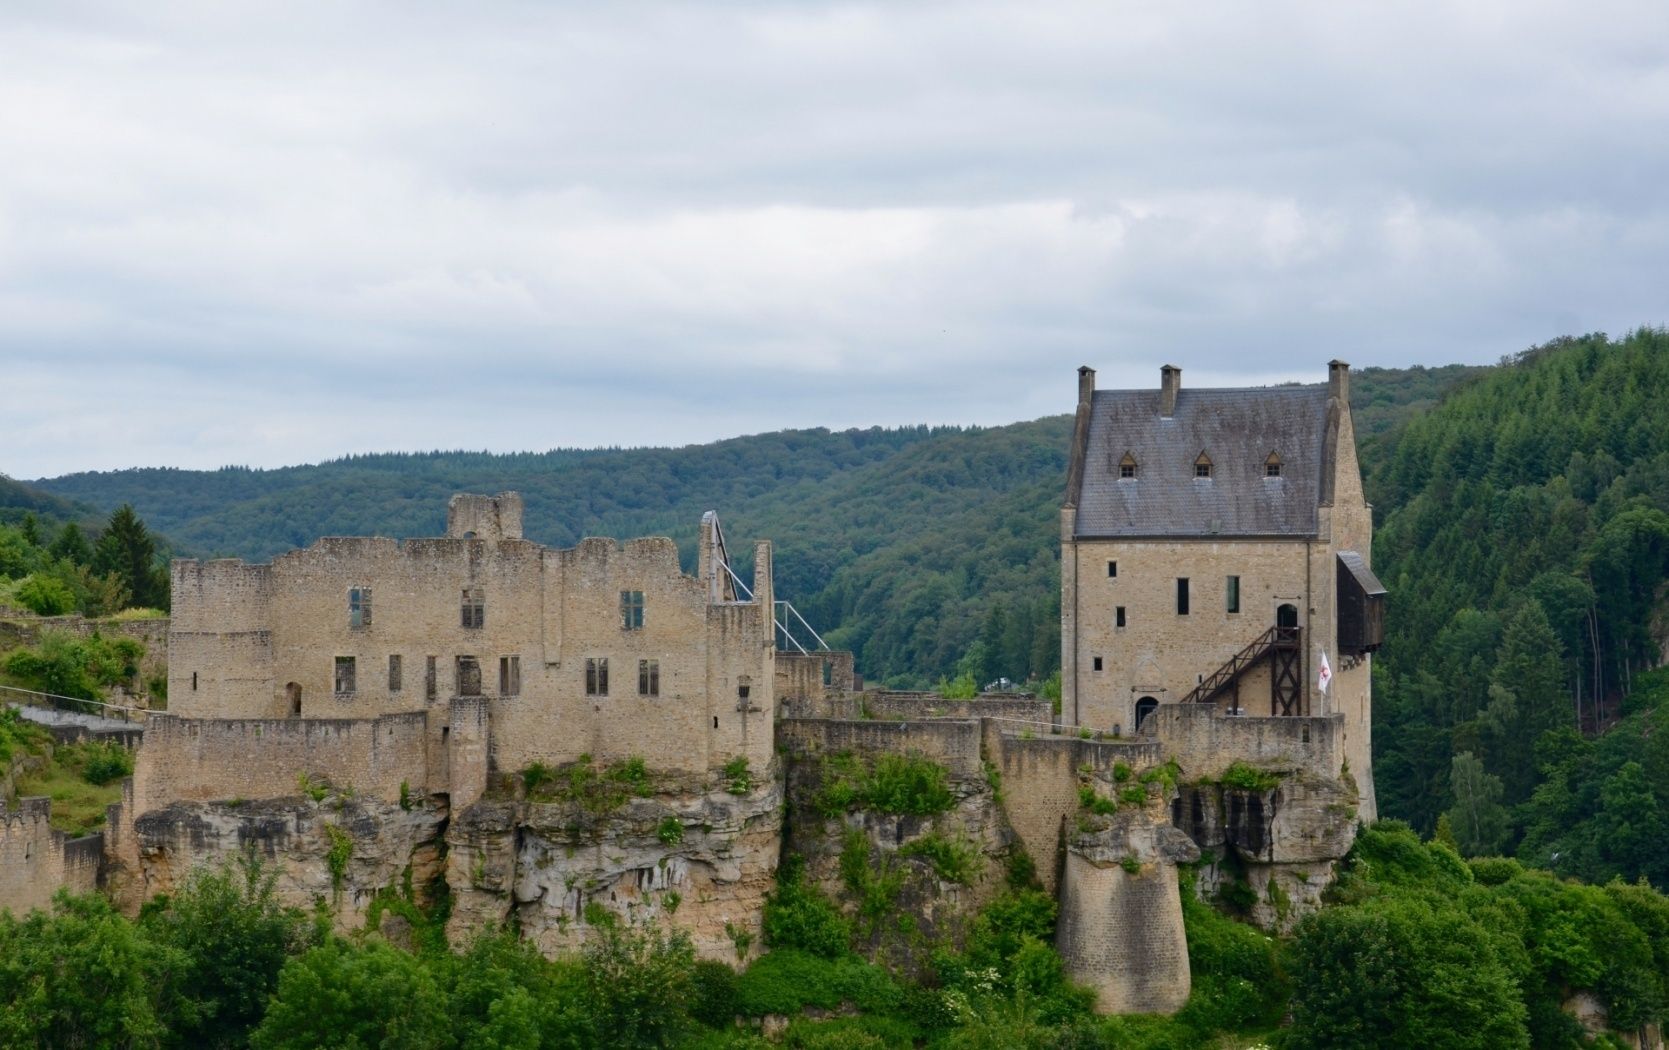 Schloss Larochette